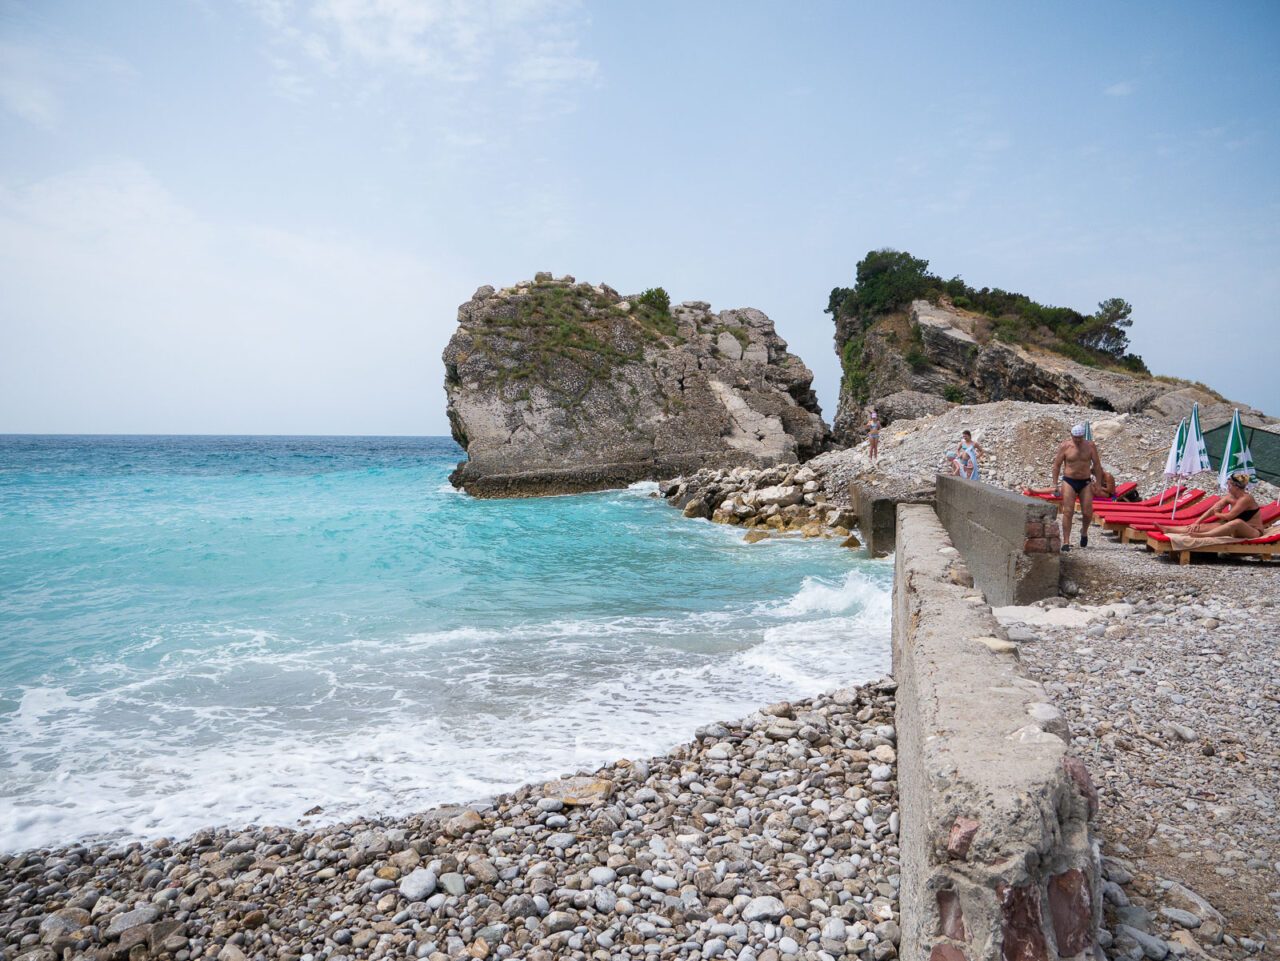 Pebbly beach and rocks on Sveti Nikola